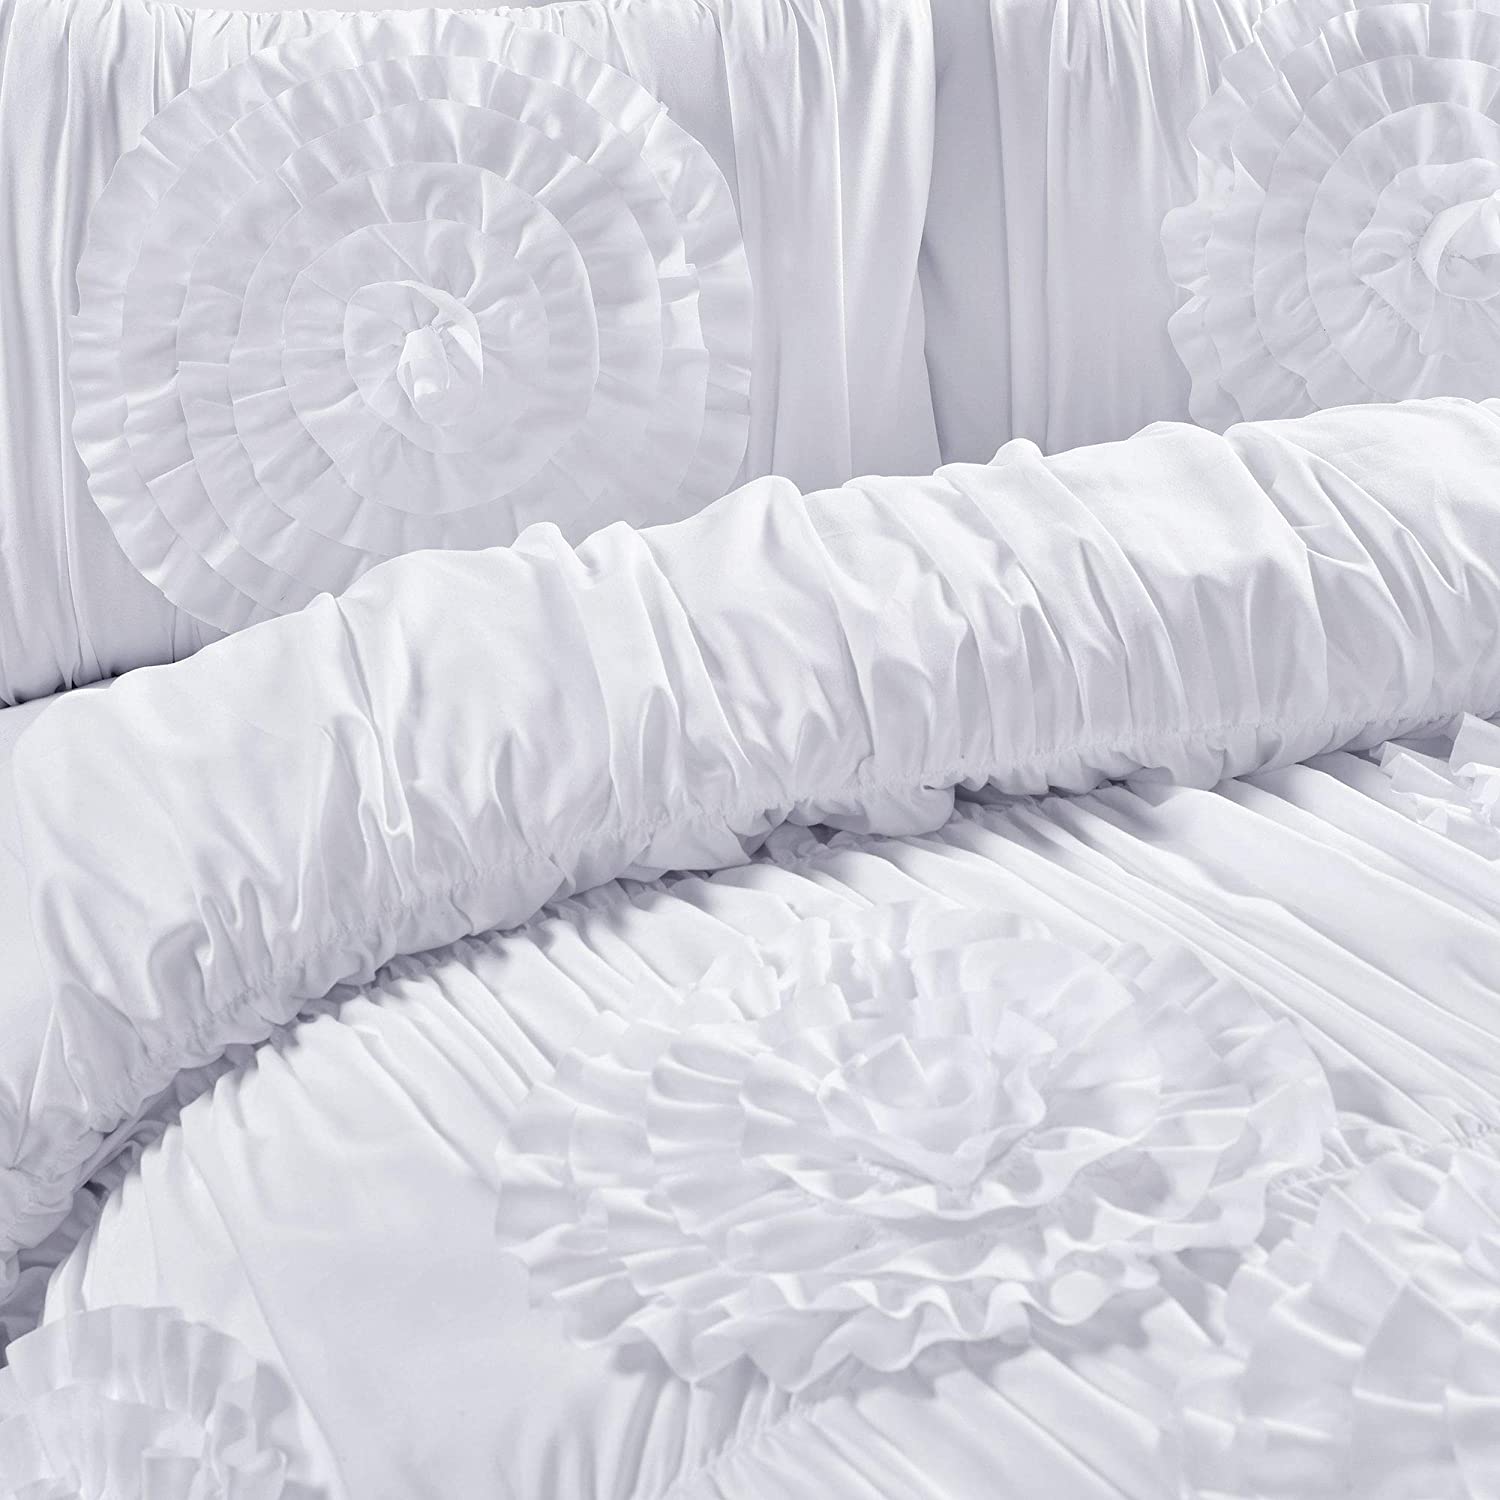 Lush Decor Serena Comforter Ruched Flower 3 Piece Set, King, White | eBay